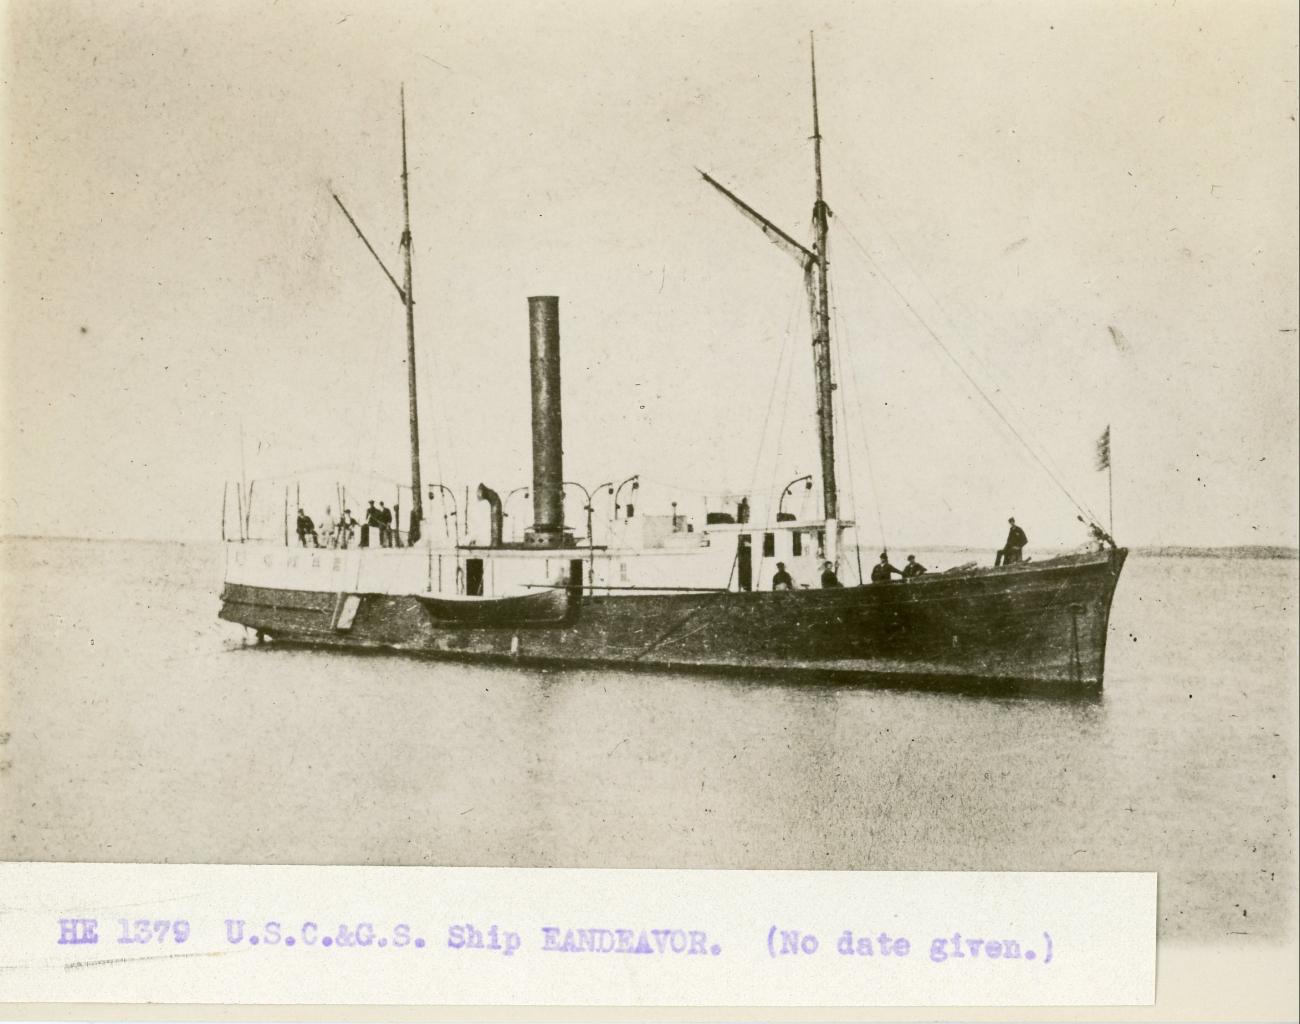 The USC&GS; Ship ENDEAVOR, a former Confederate blockade runner